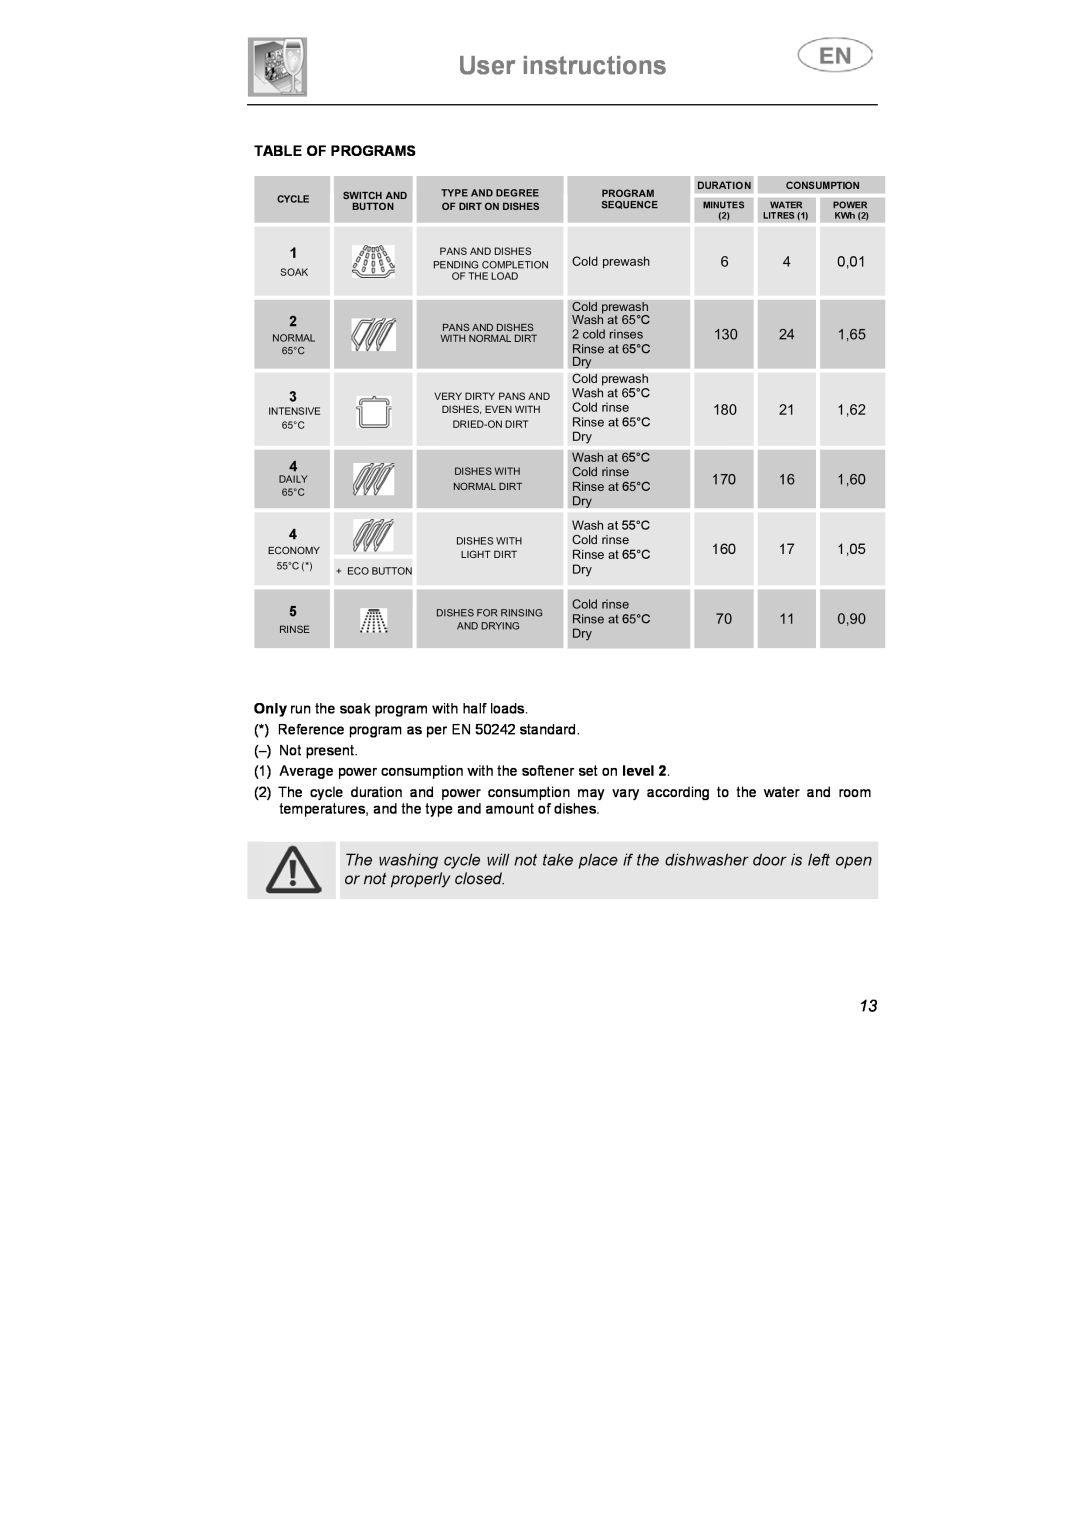 Smeg CA01-3 instruction manual User instructions, Table Of Programs 